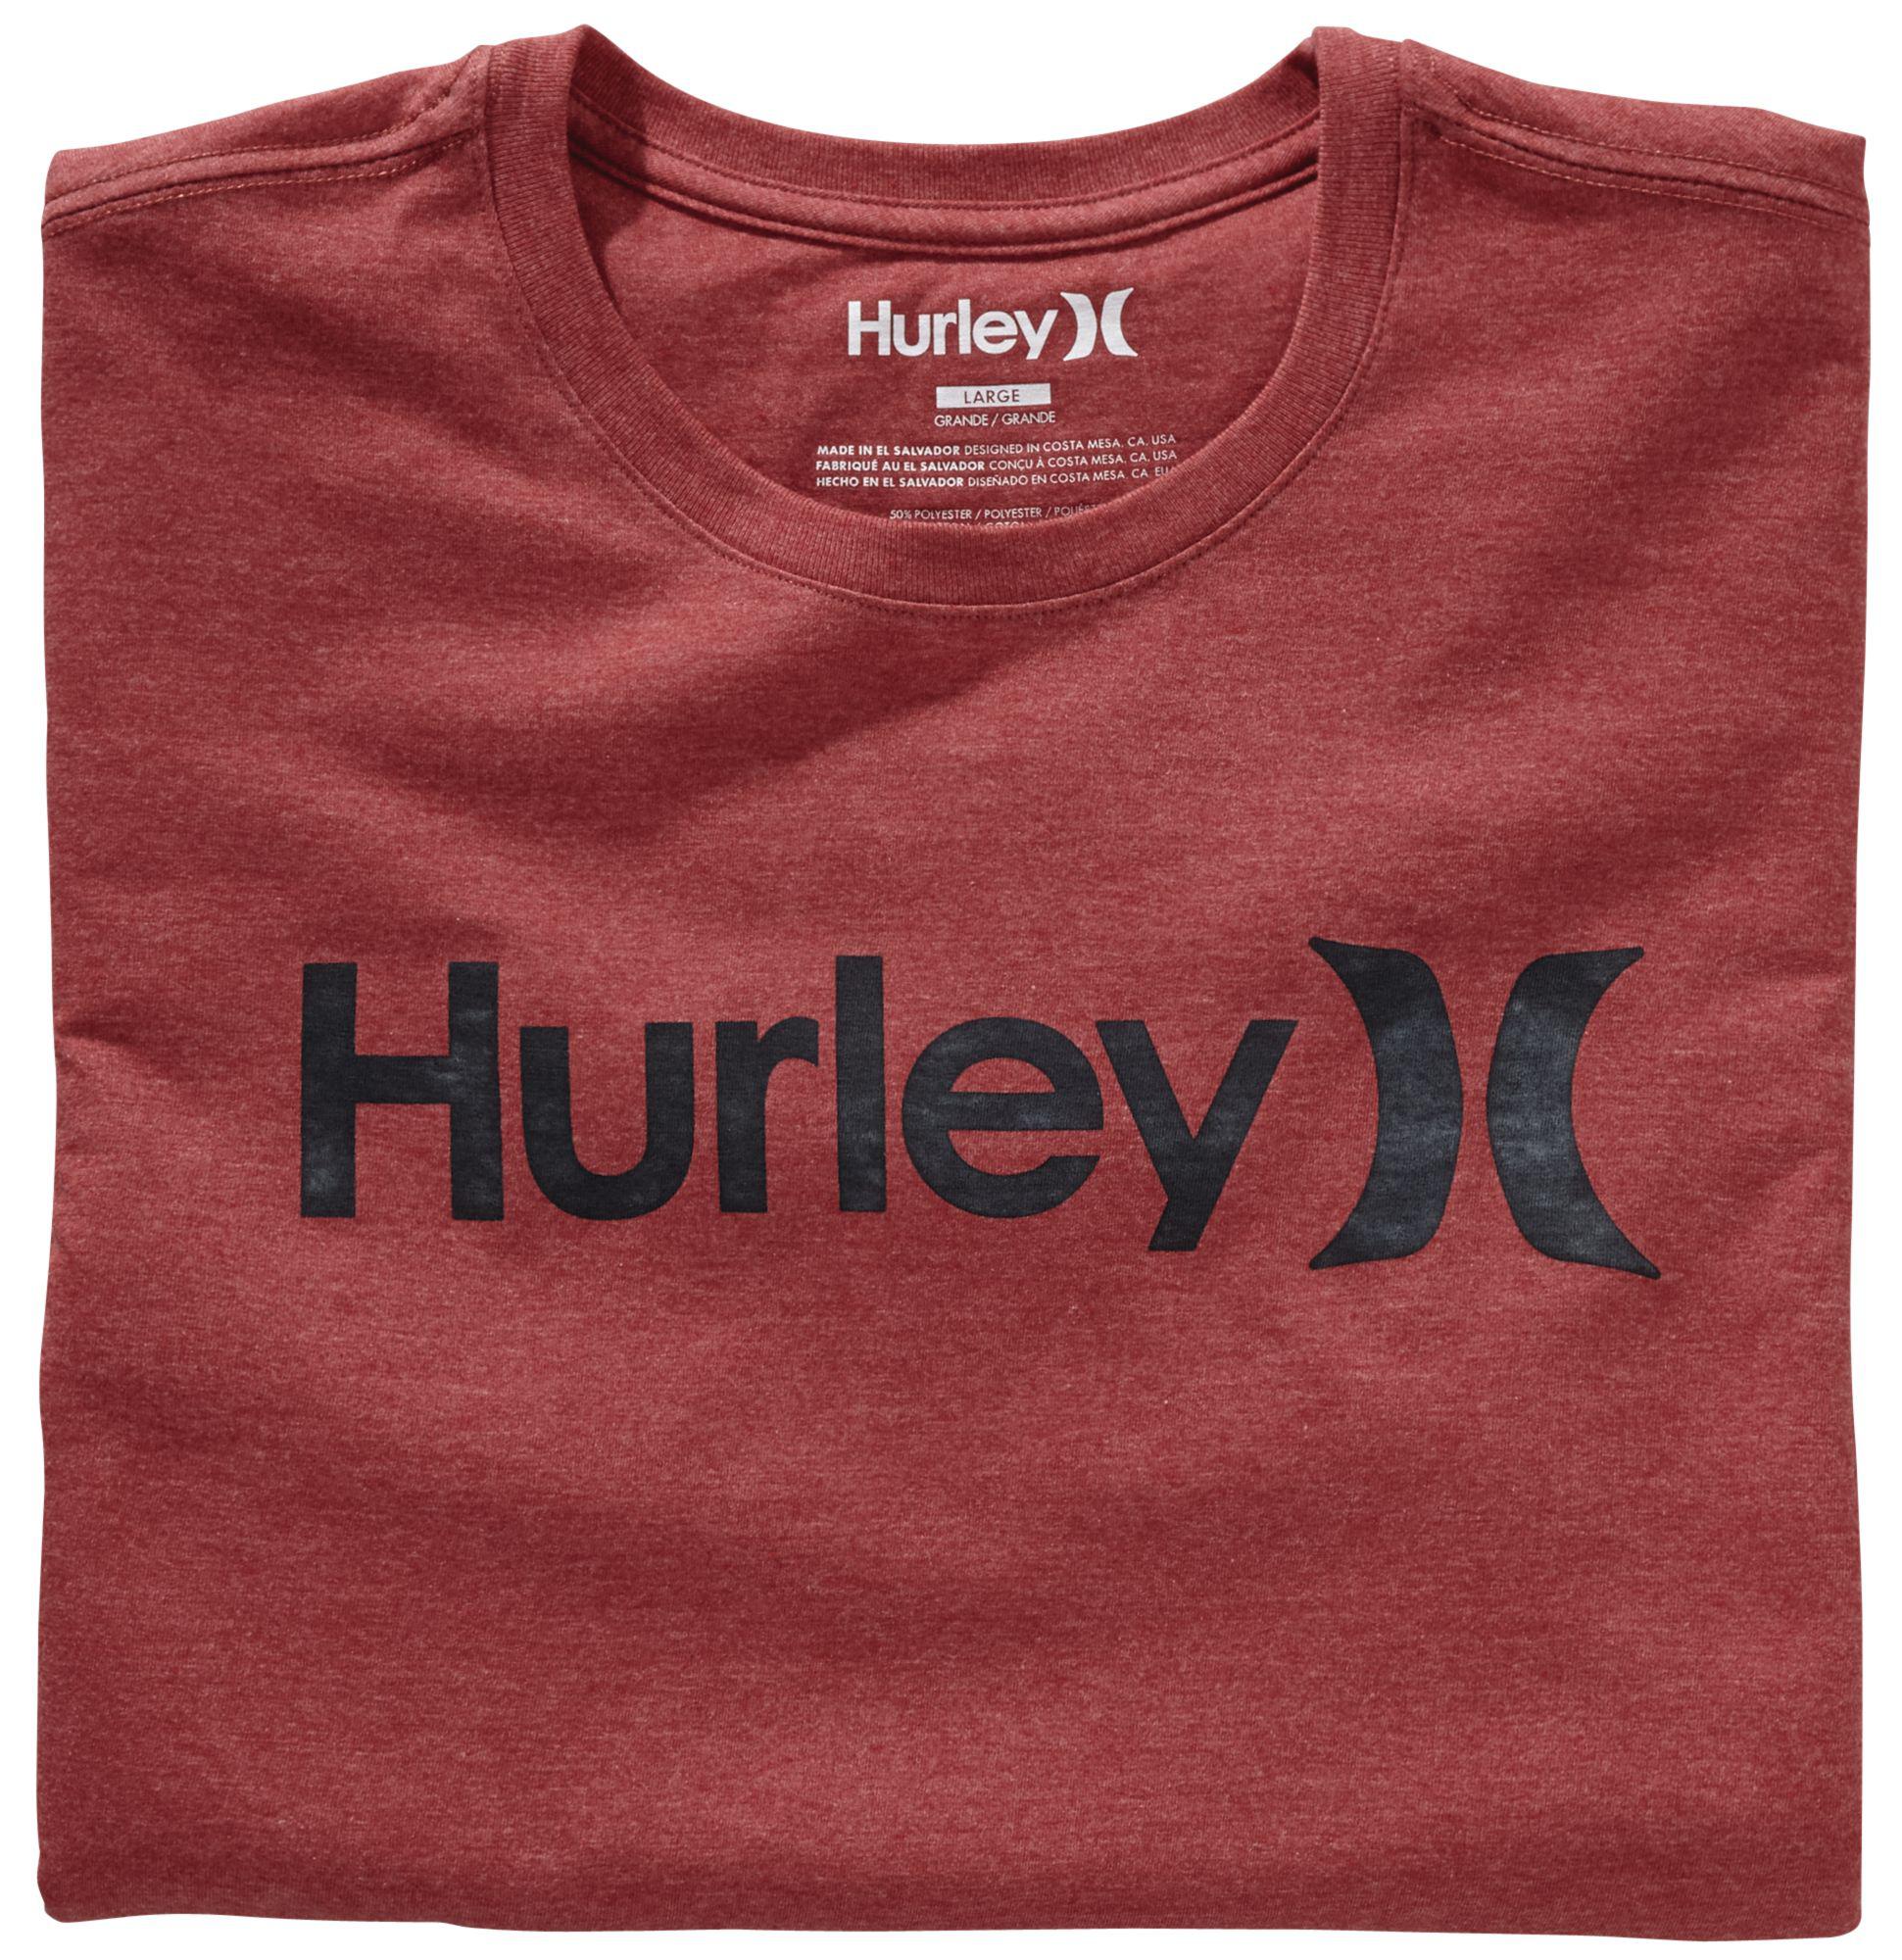 red hurley shirt